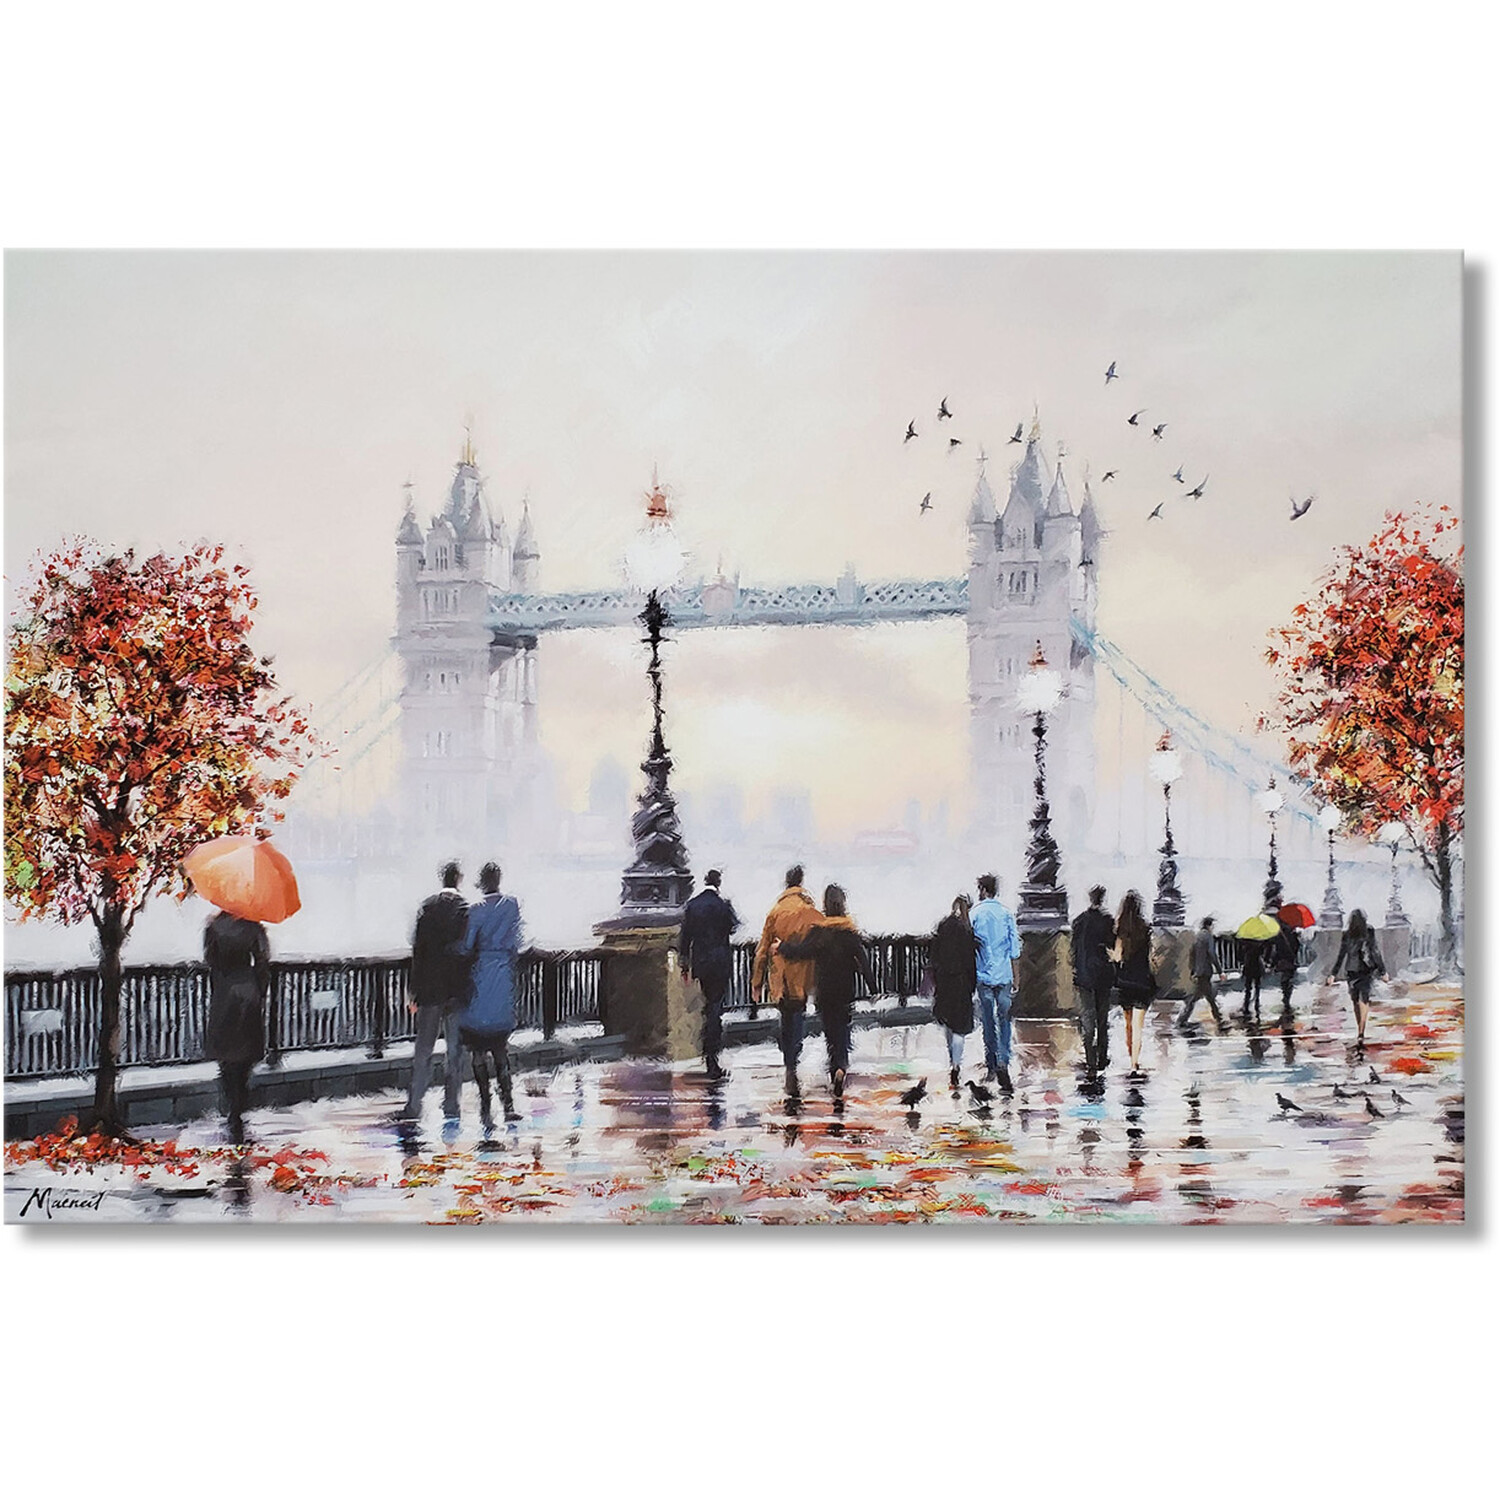 Macneil Thames Autumn Walk Canvas Wall Art Image